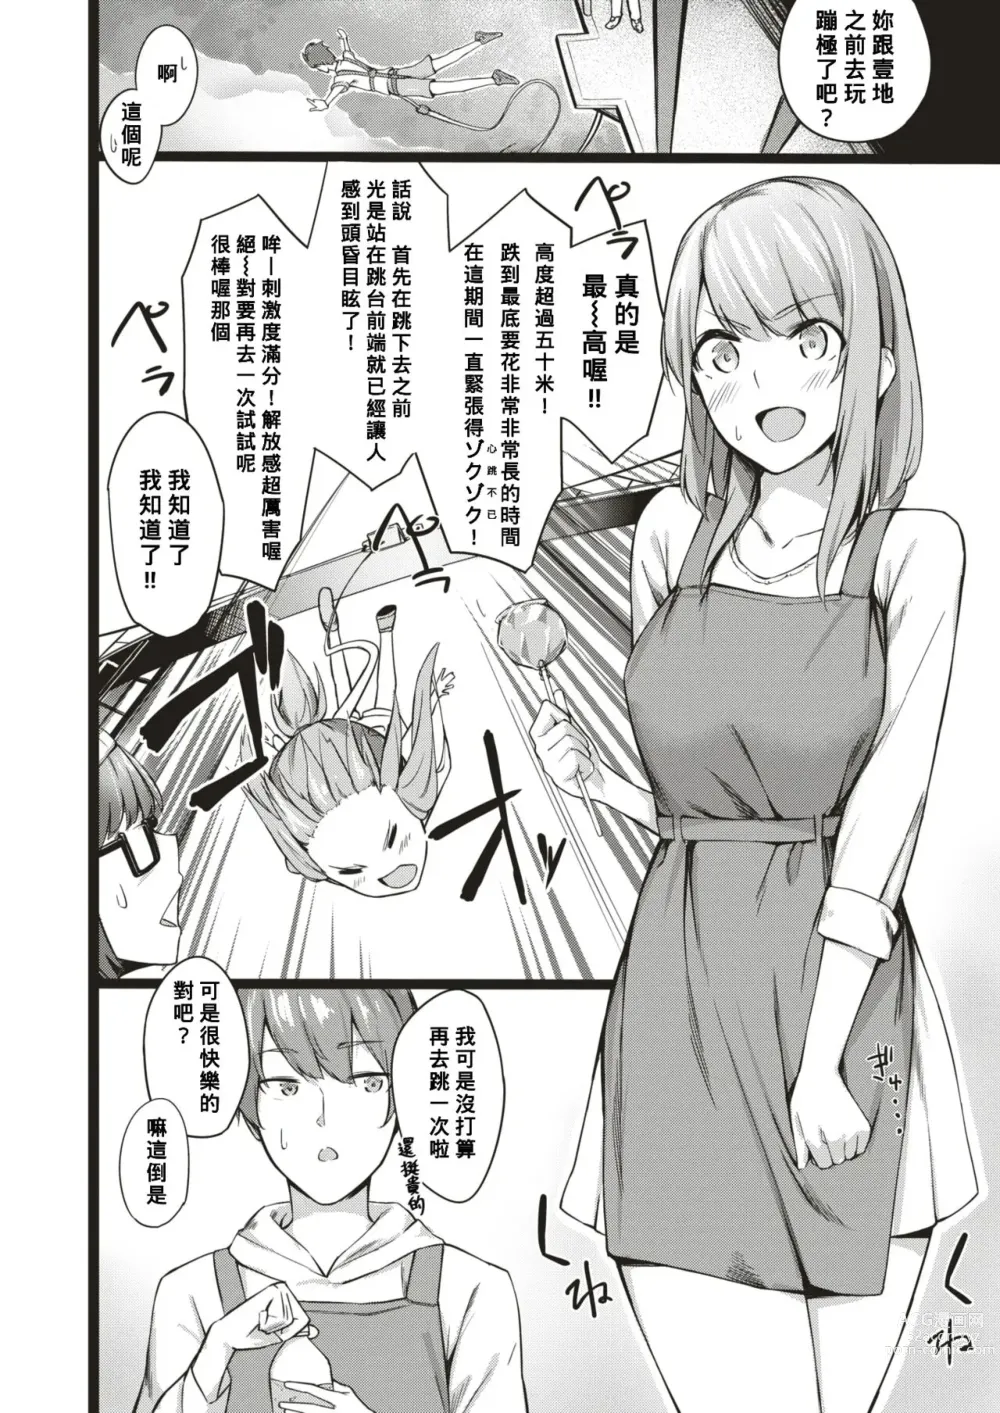 Page 2 of manga Koukai Kakurenbo - What is inside the secret hole?